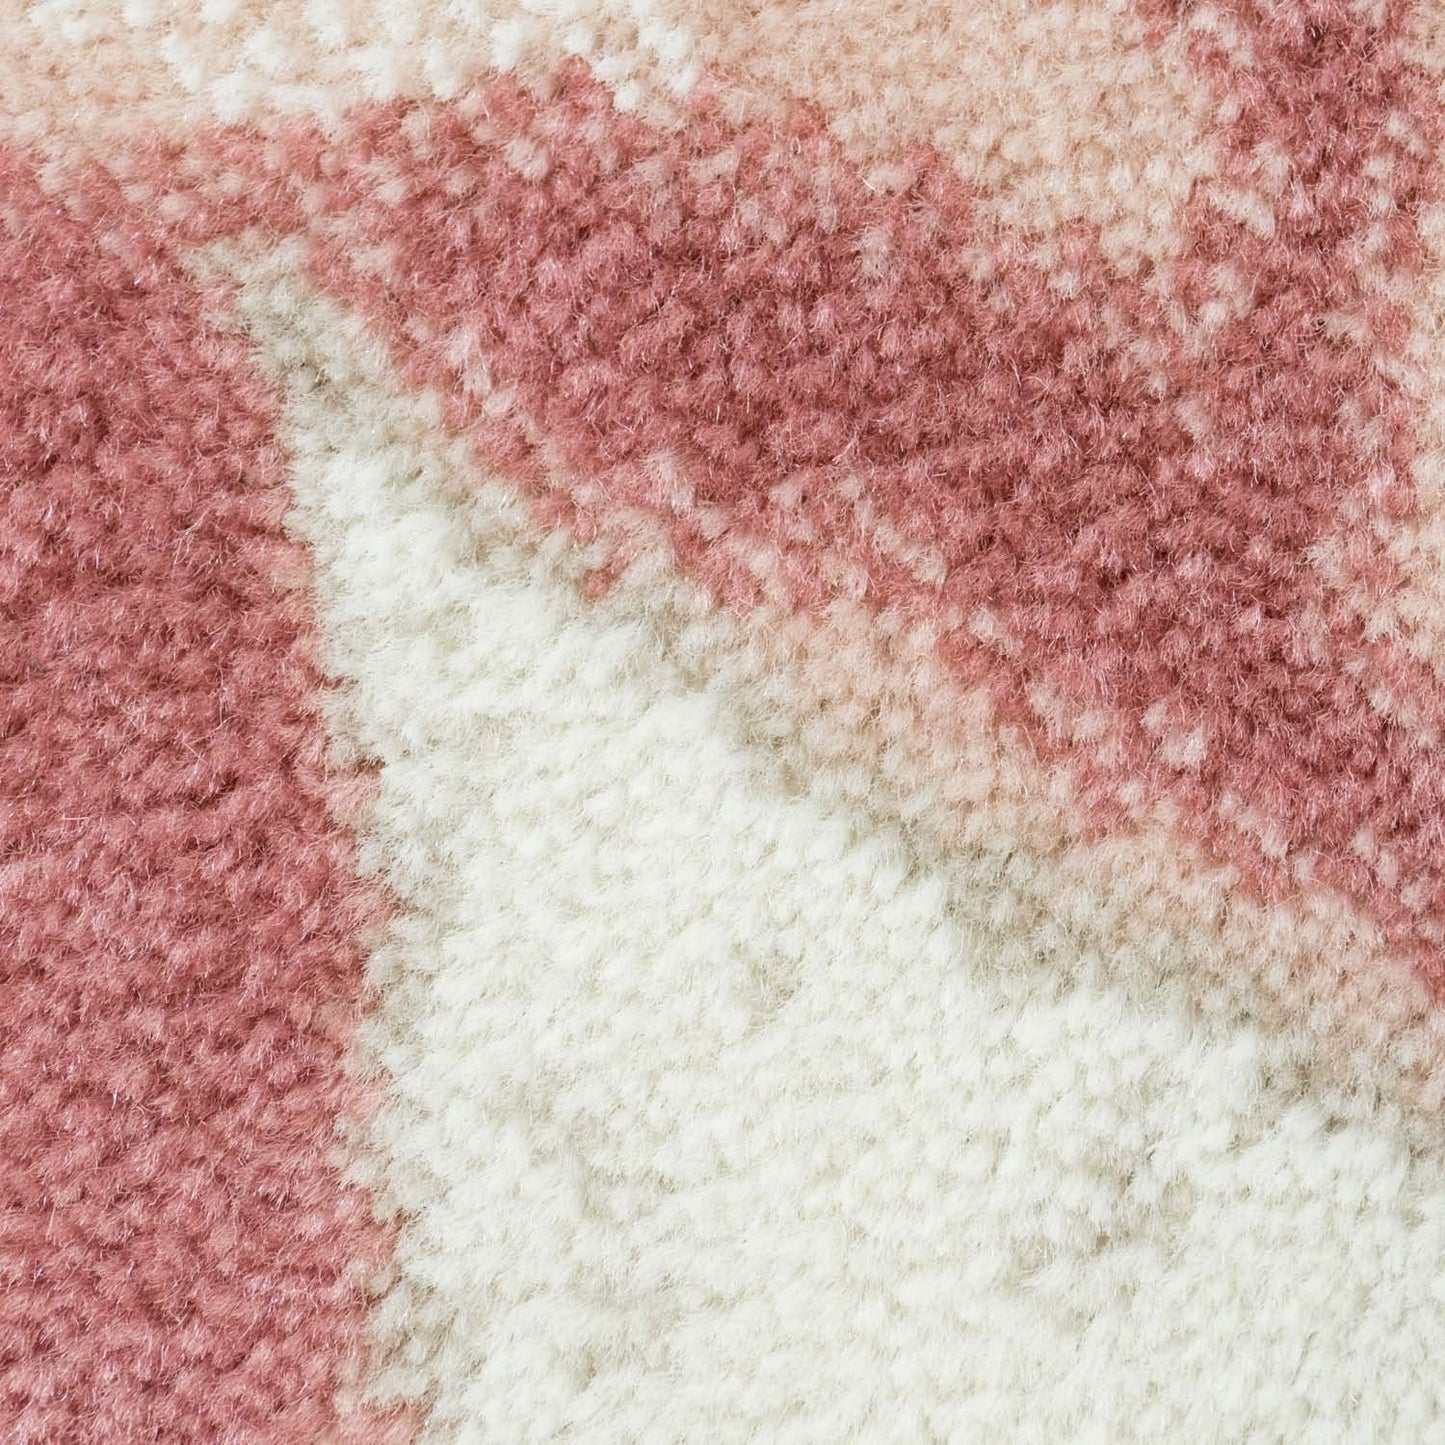 begonia cream floral area rug pink 6x8, 6x9 ft Living Room, Bedroom, Dining Area, Kitchen Carpet